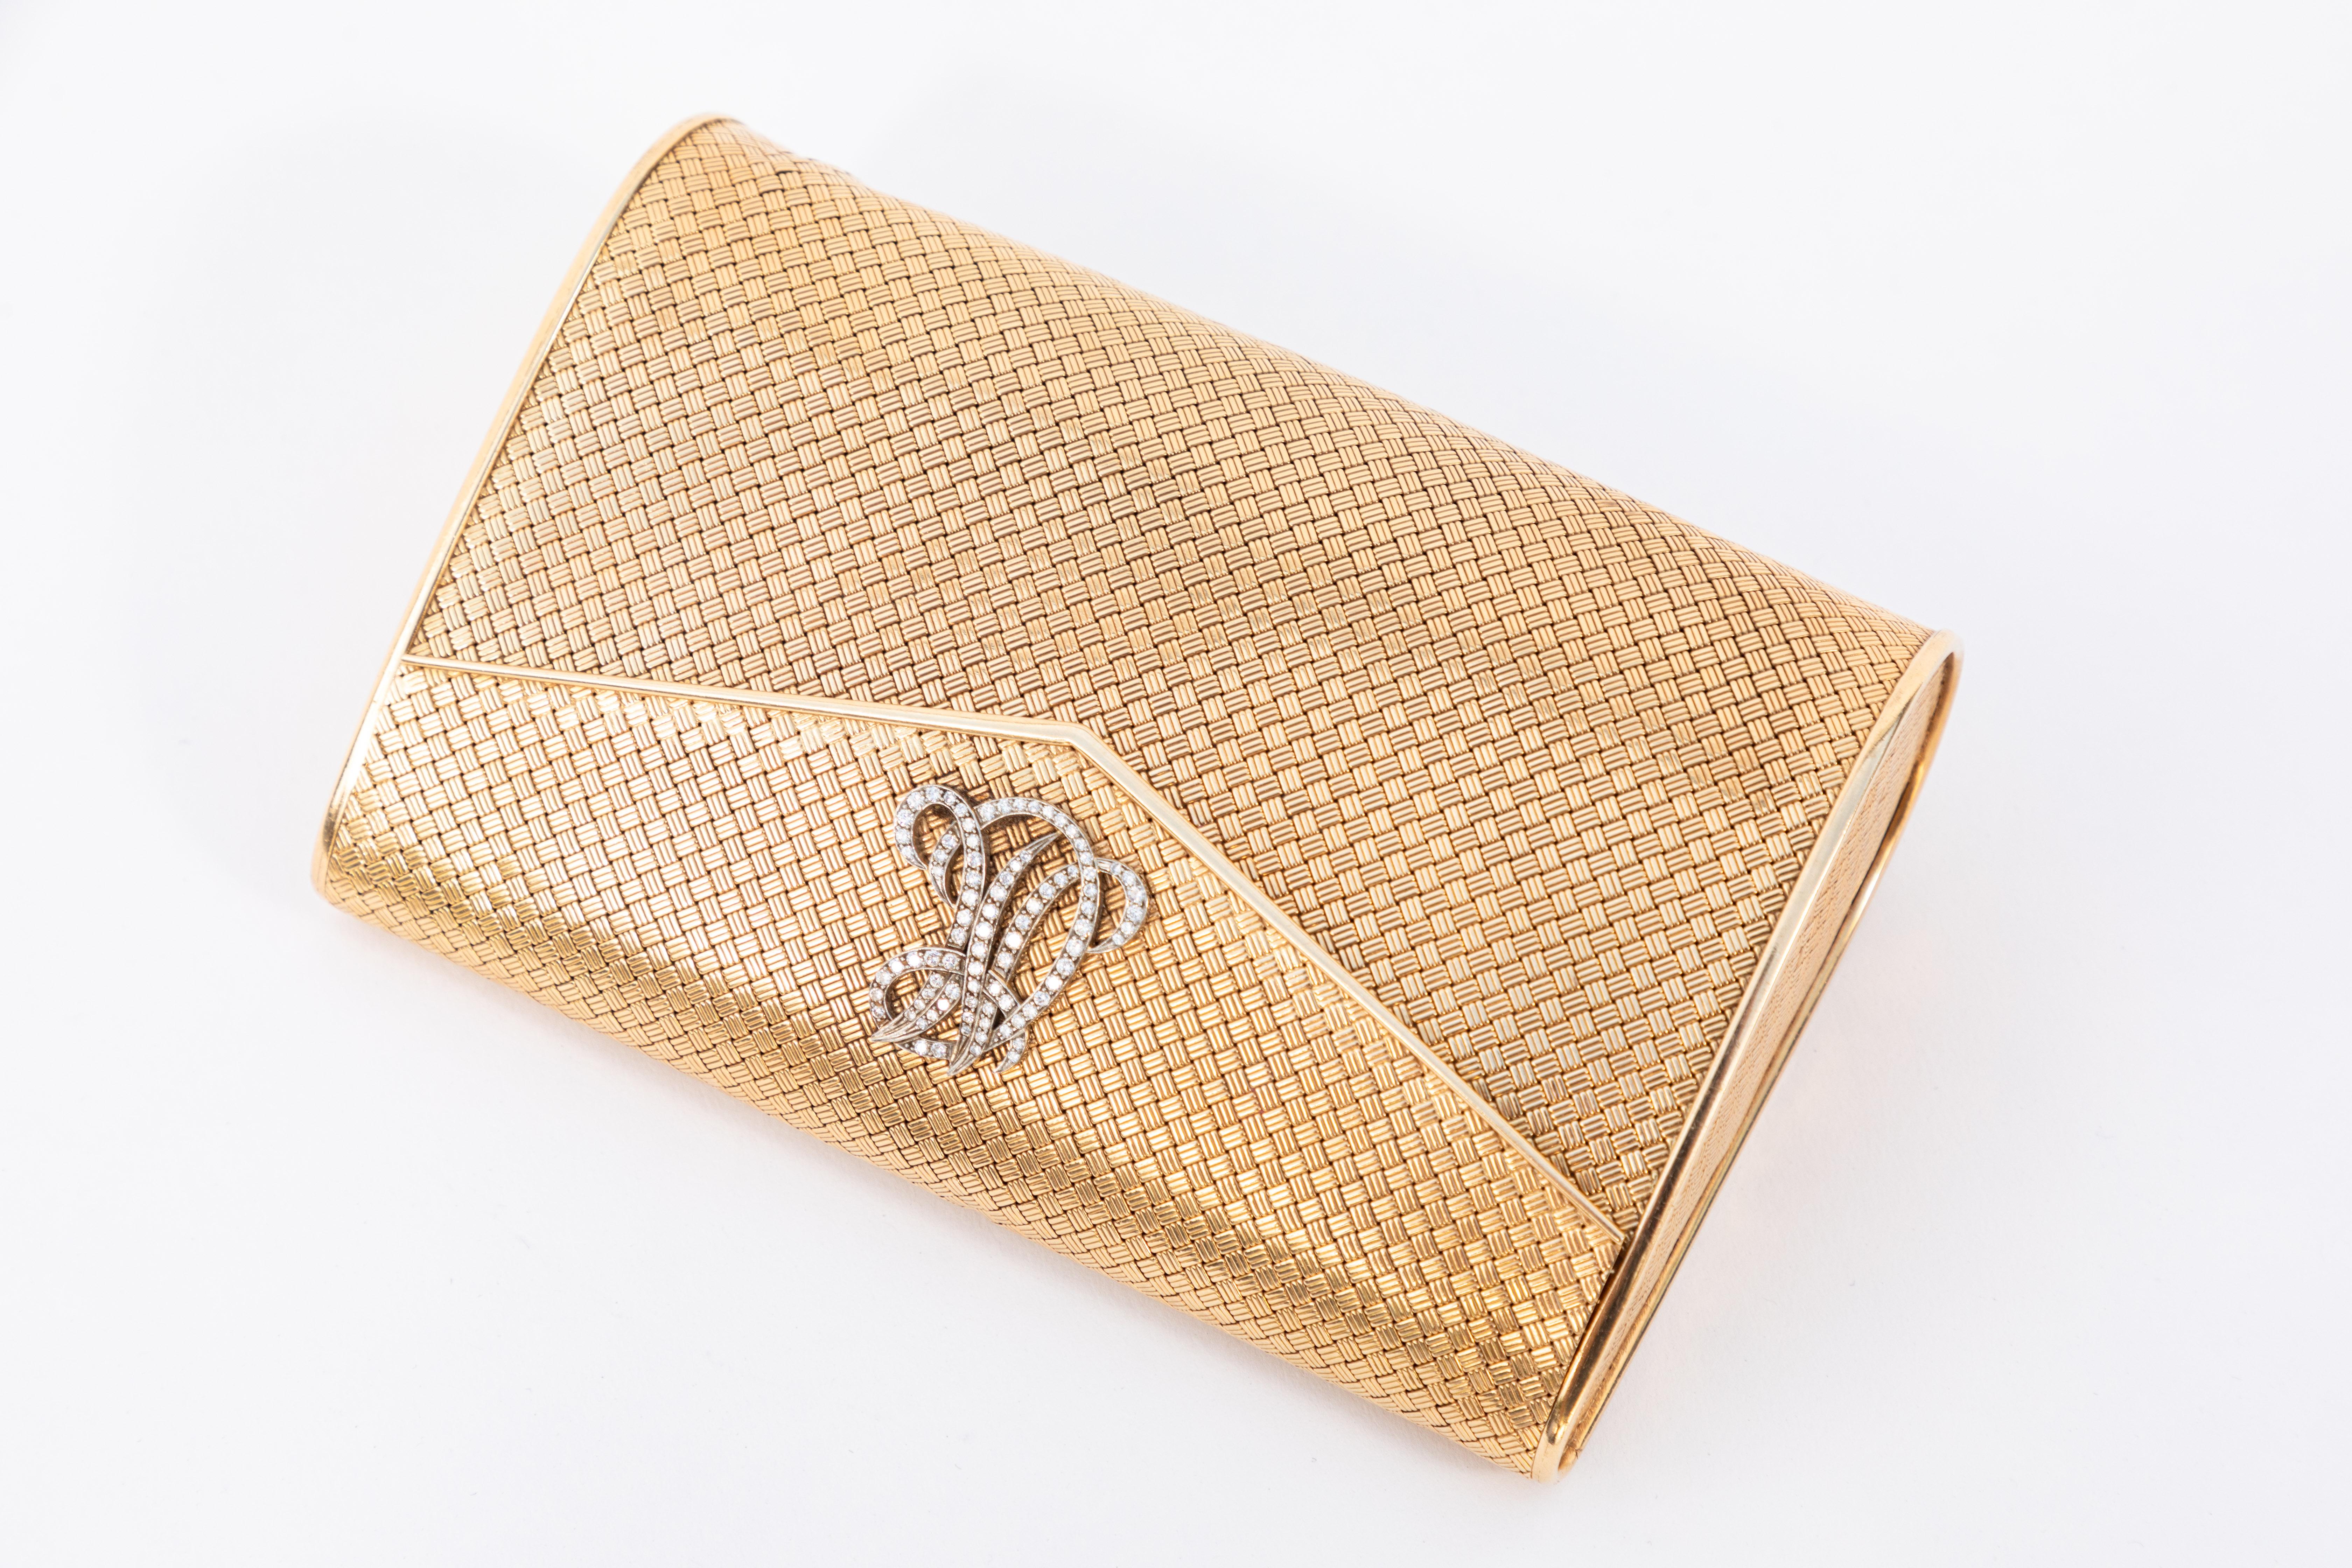 14-karat gold clutch purse with diamonds. Woven 14-karat gold. Believed to be of Italian origin. Initials are 